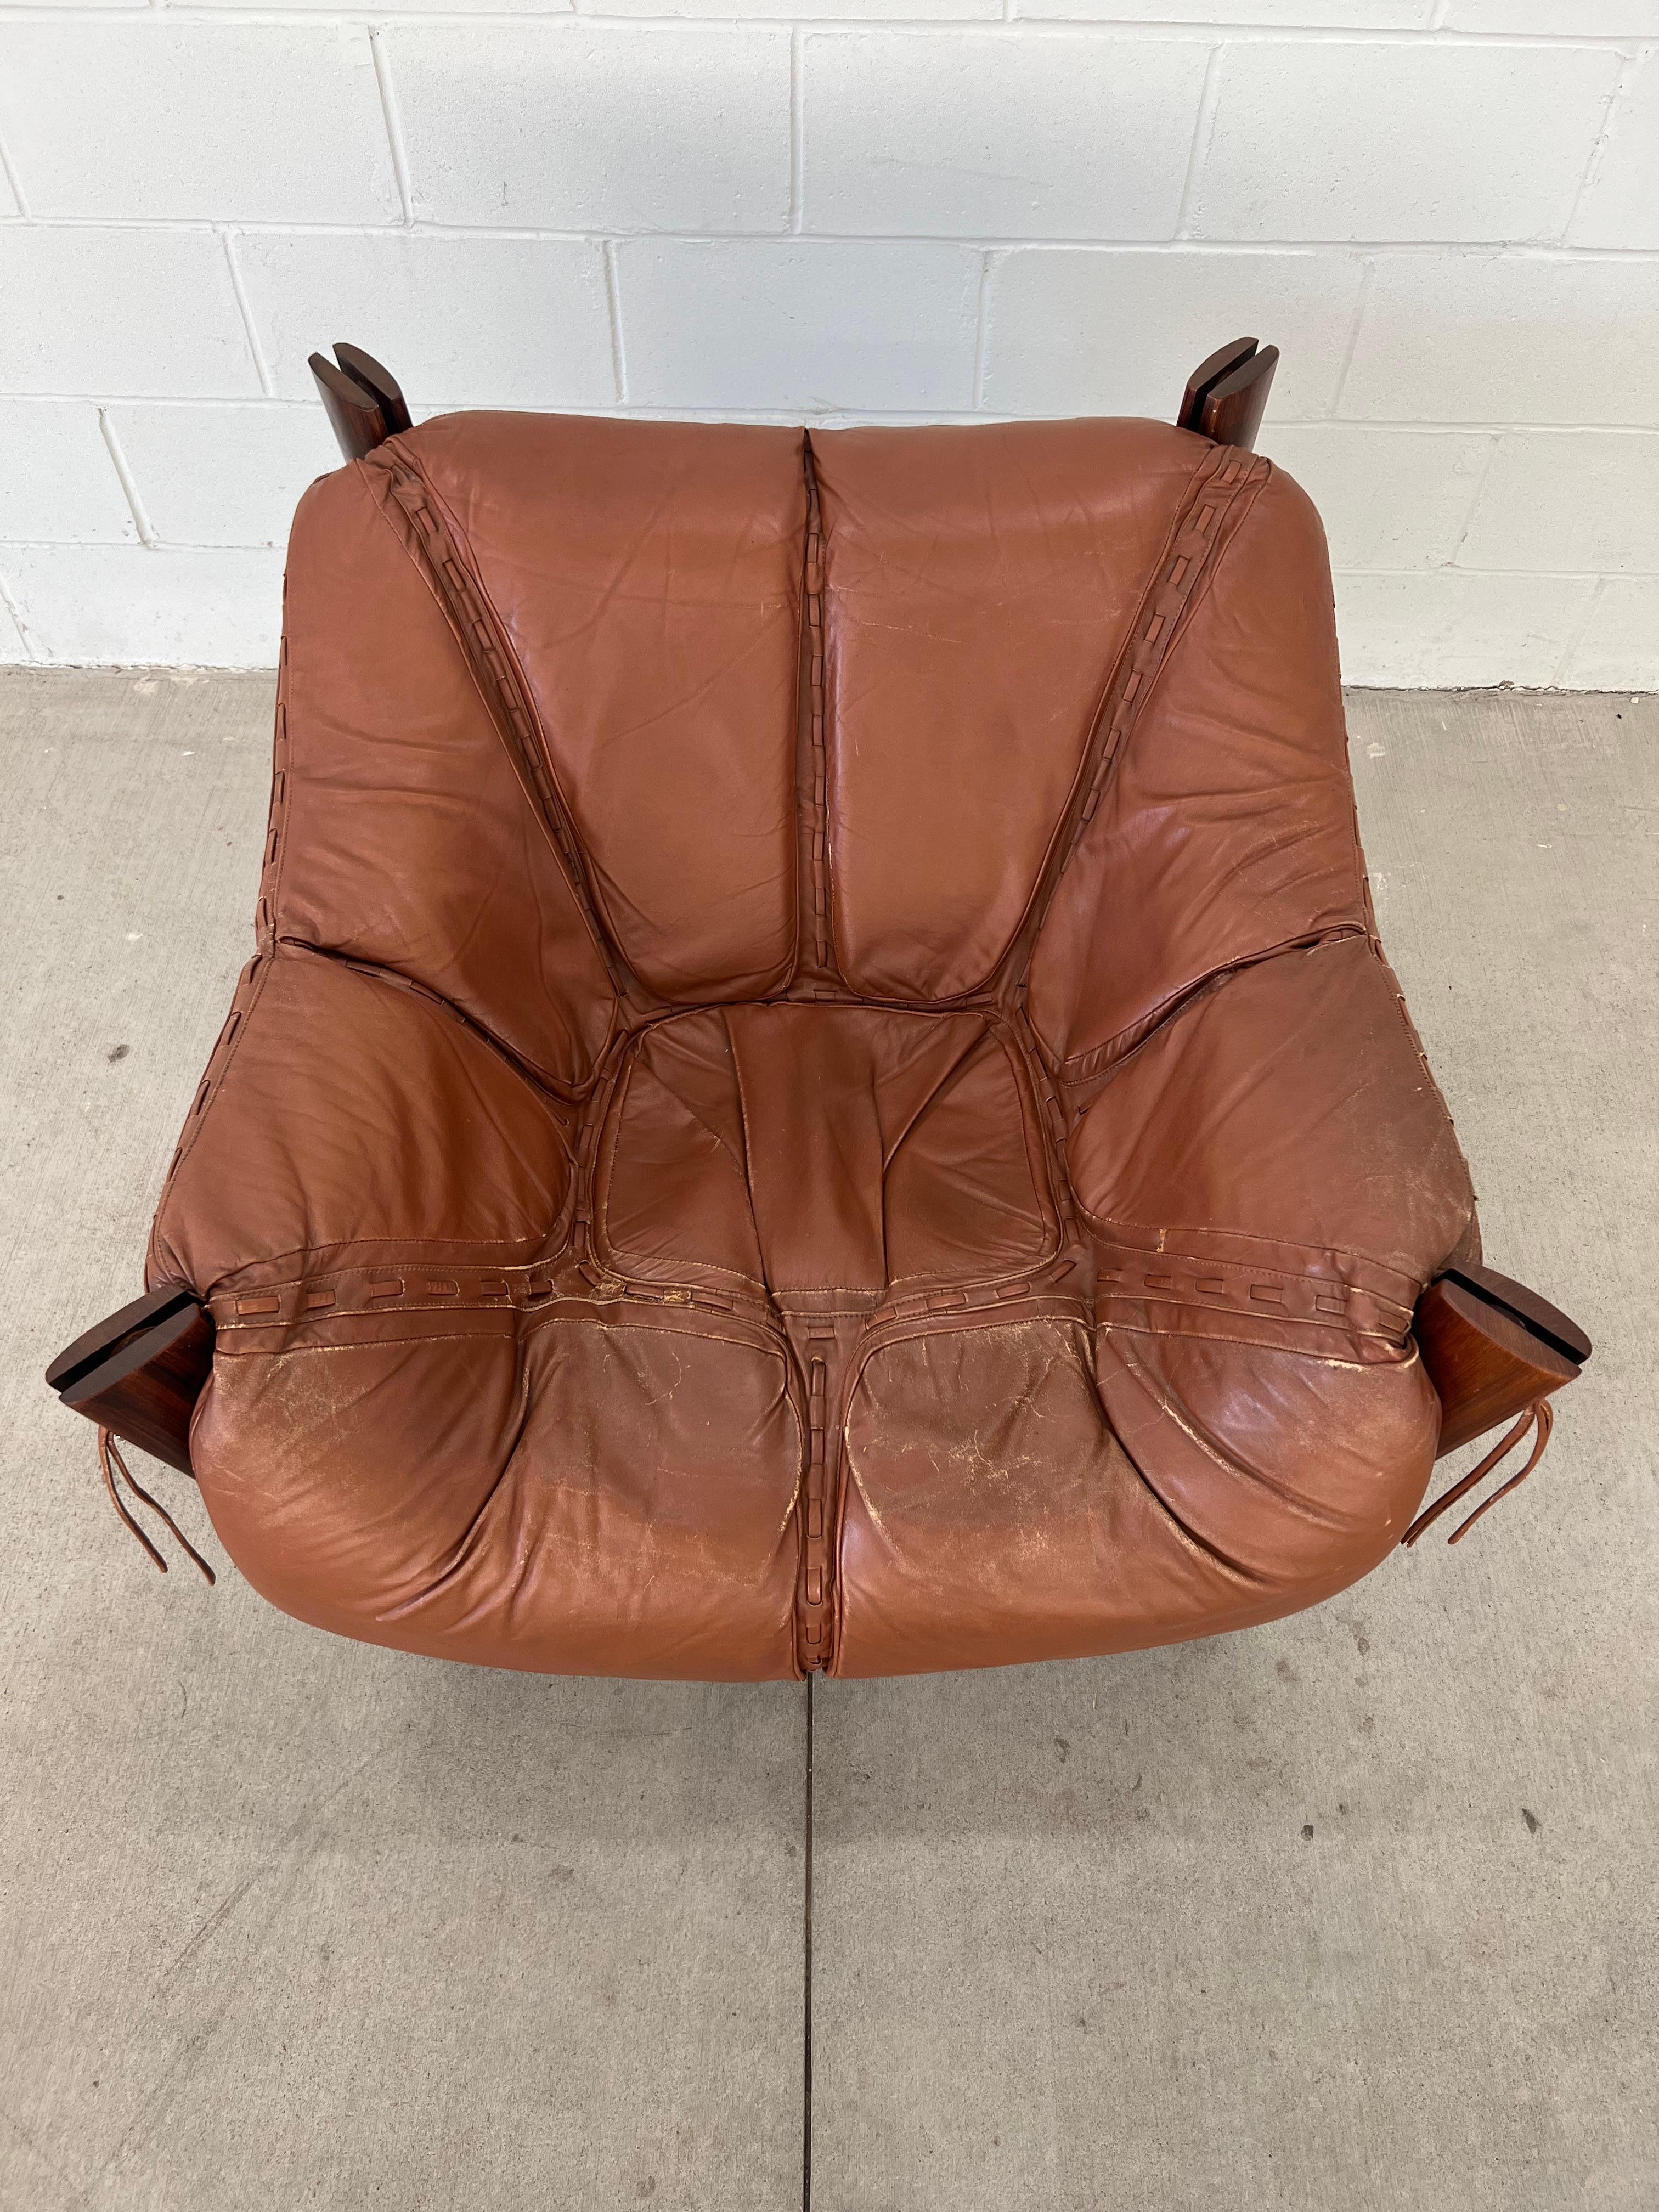 Percival Lafer Mp 211 Leather Brazilian Lounge Chair 3